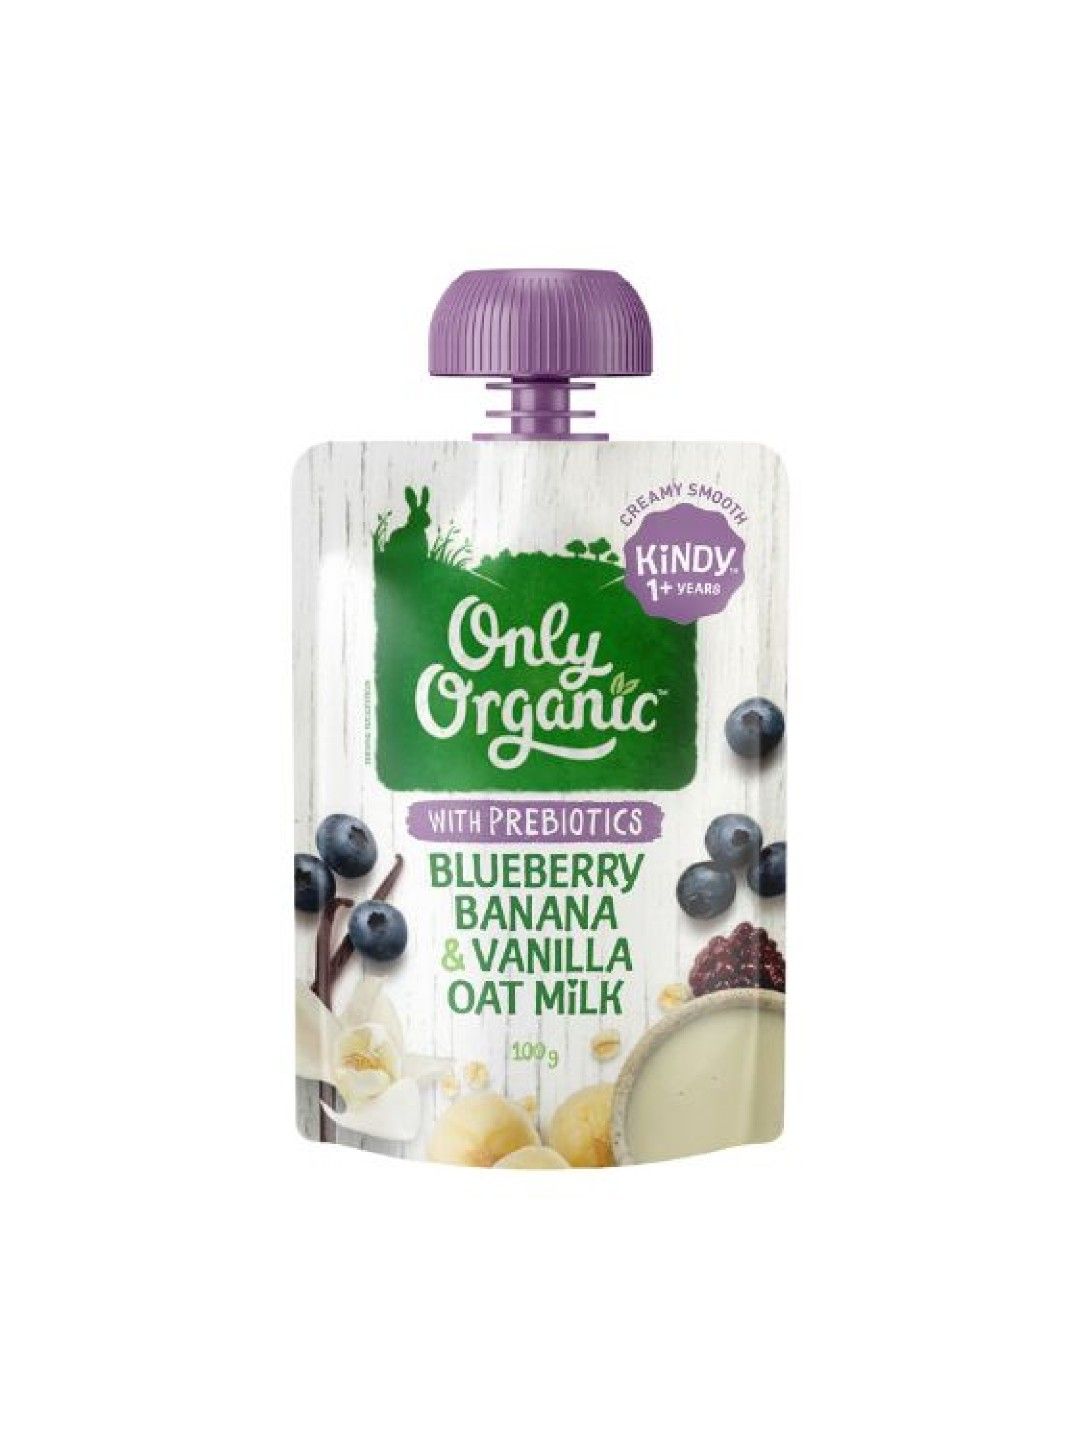 Only Organic Banana Blueberry Vanilla Oat Milk (1-5yrs) 100g (No Color- Image 1)